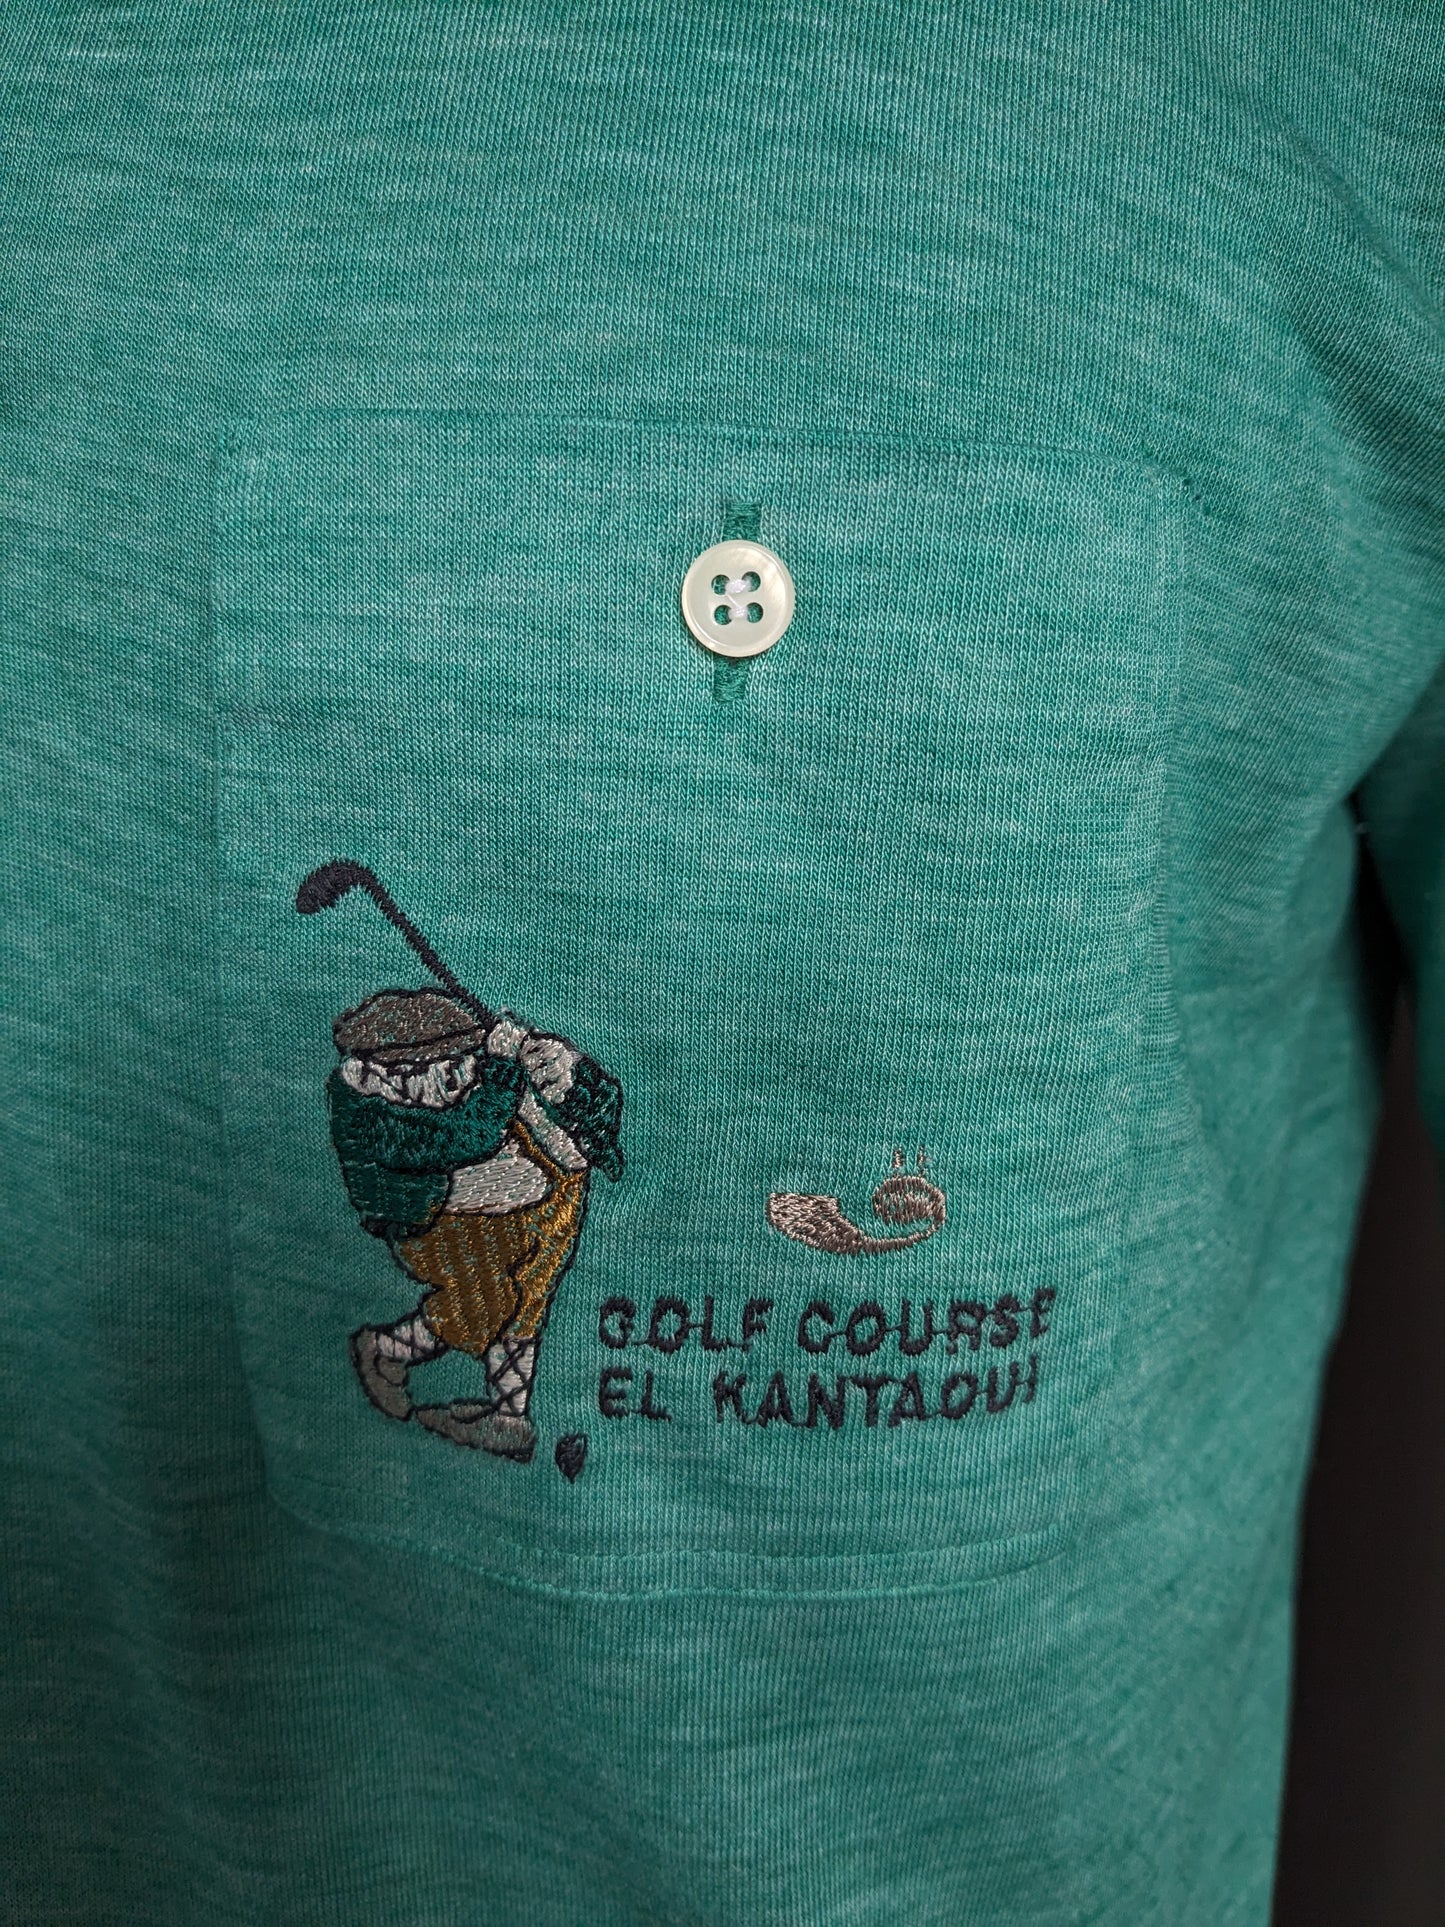 Vintage Gerard Bert Golf Polo. "Golf Course El Kantaoui". Green mixed. Size L.